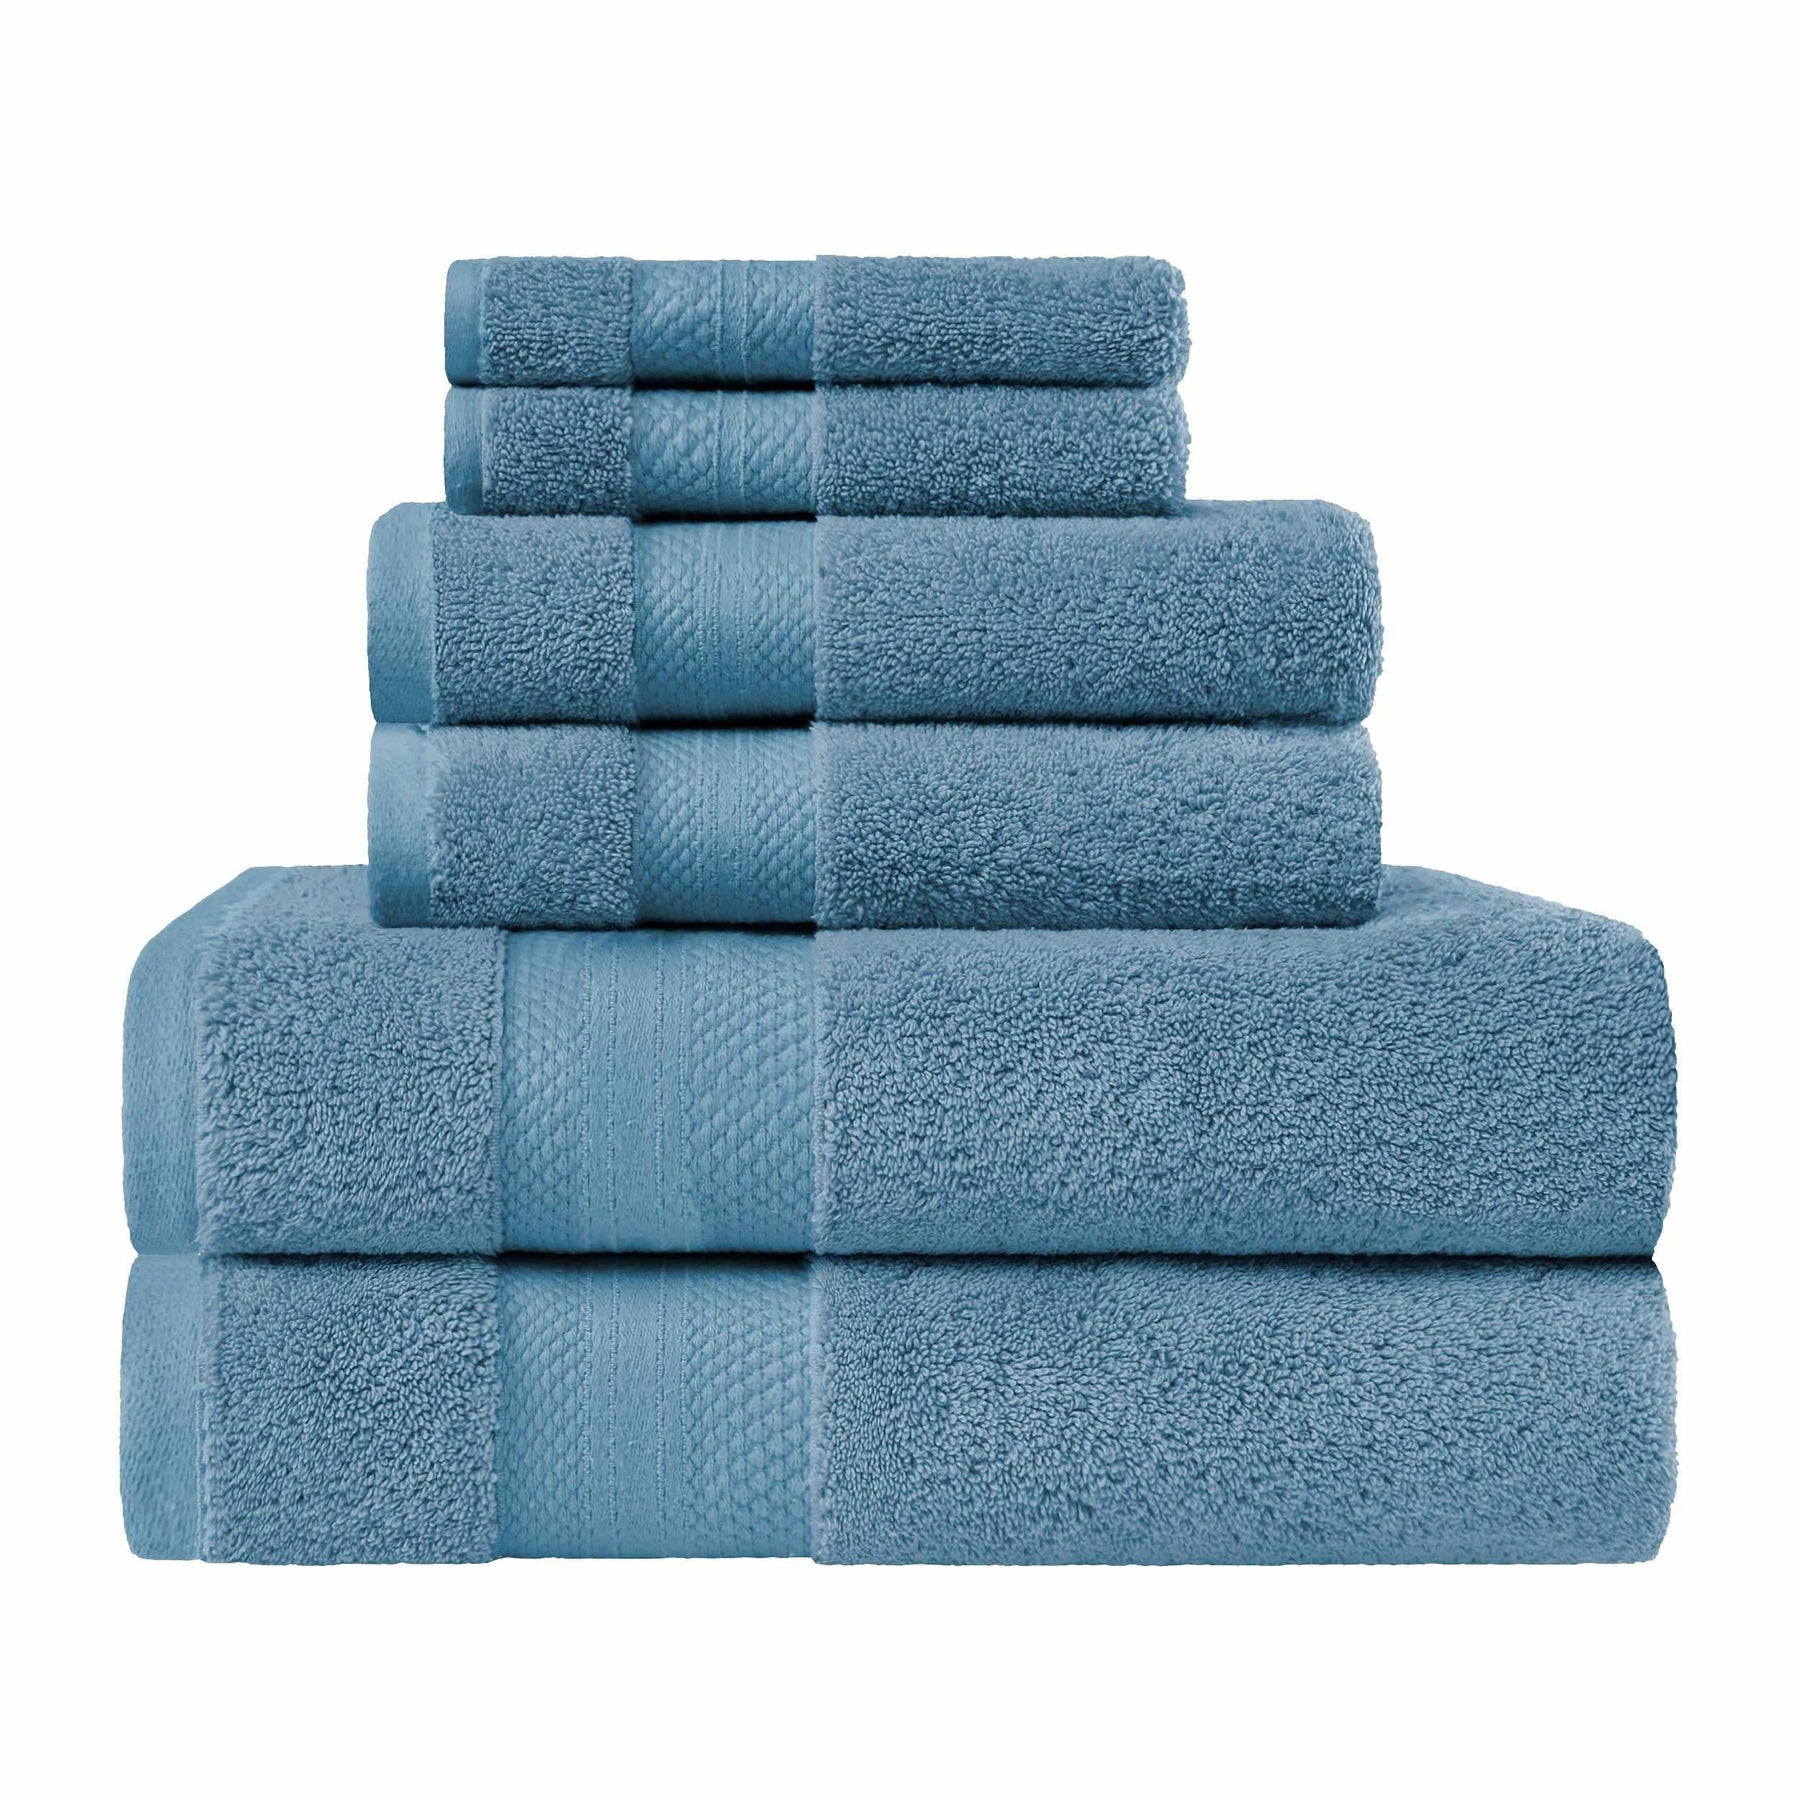  Superior Premium Turkish Cotton Assorted 6-Piece Towel Set - Denim Blue